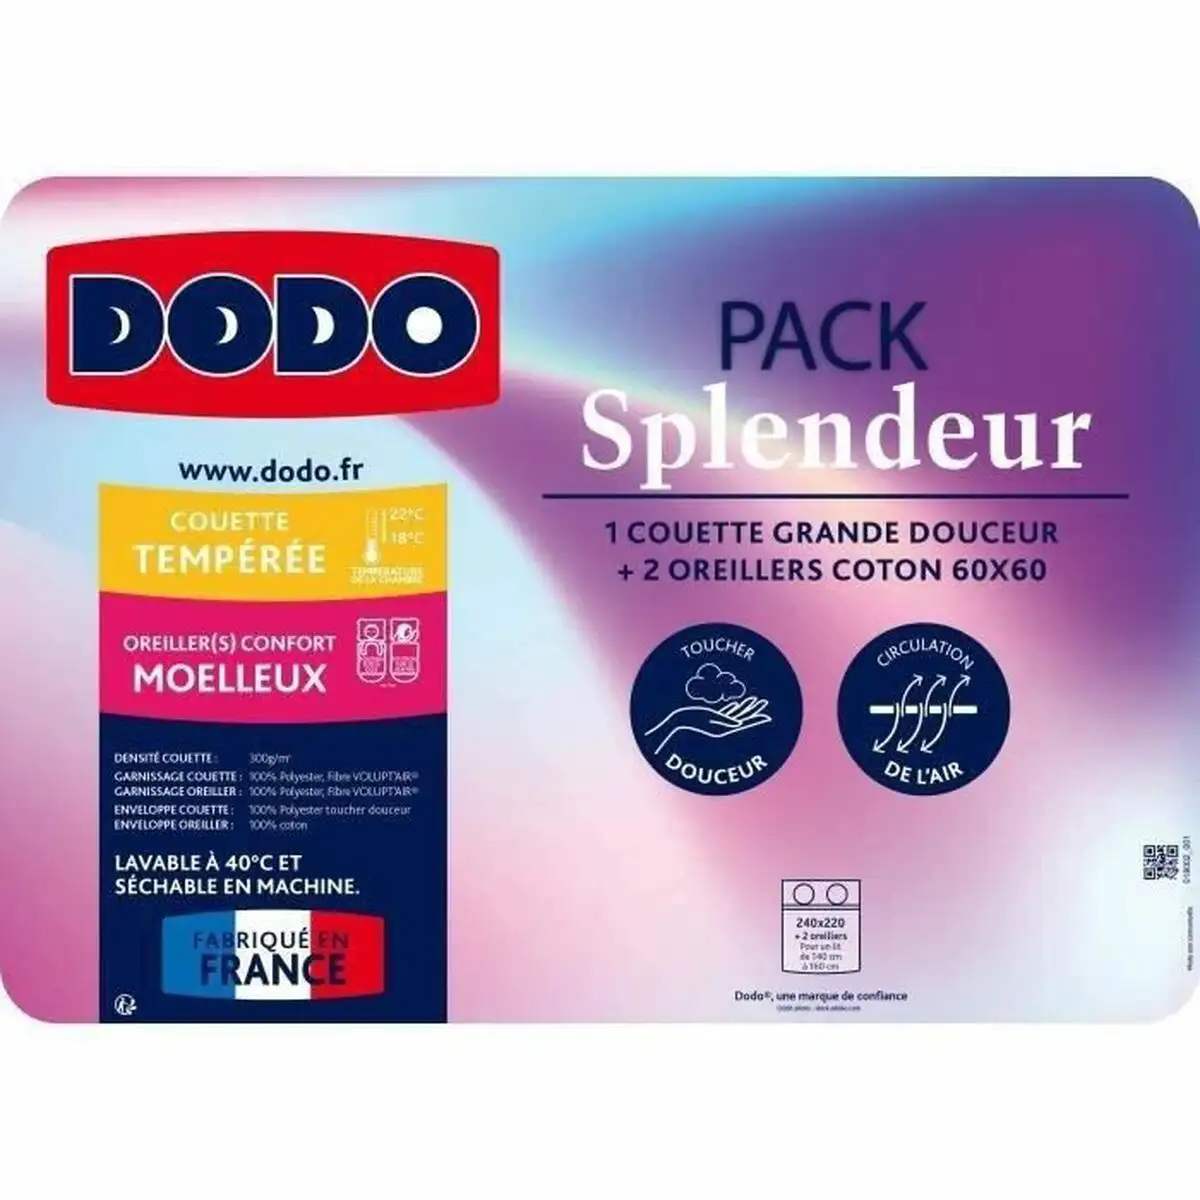 DODO - Tous les produits Dodo